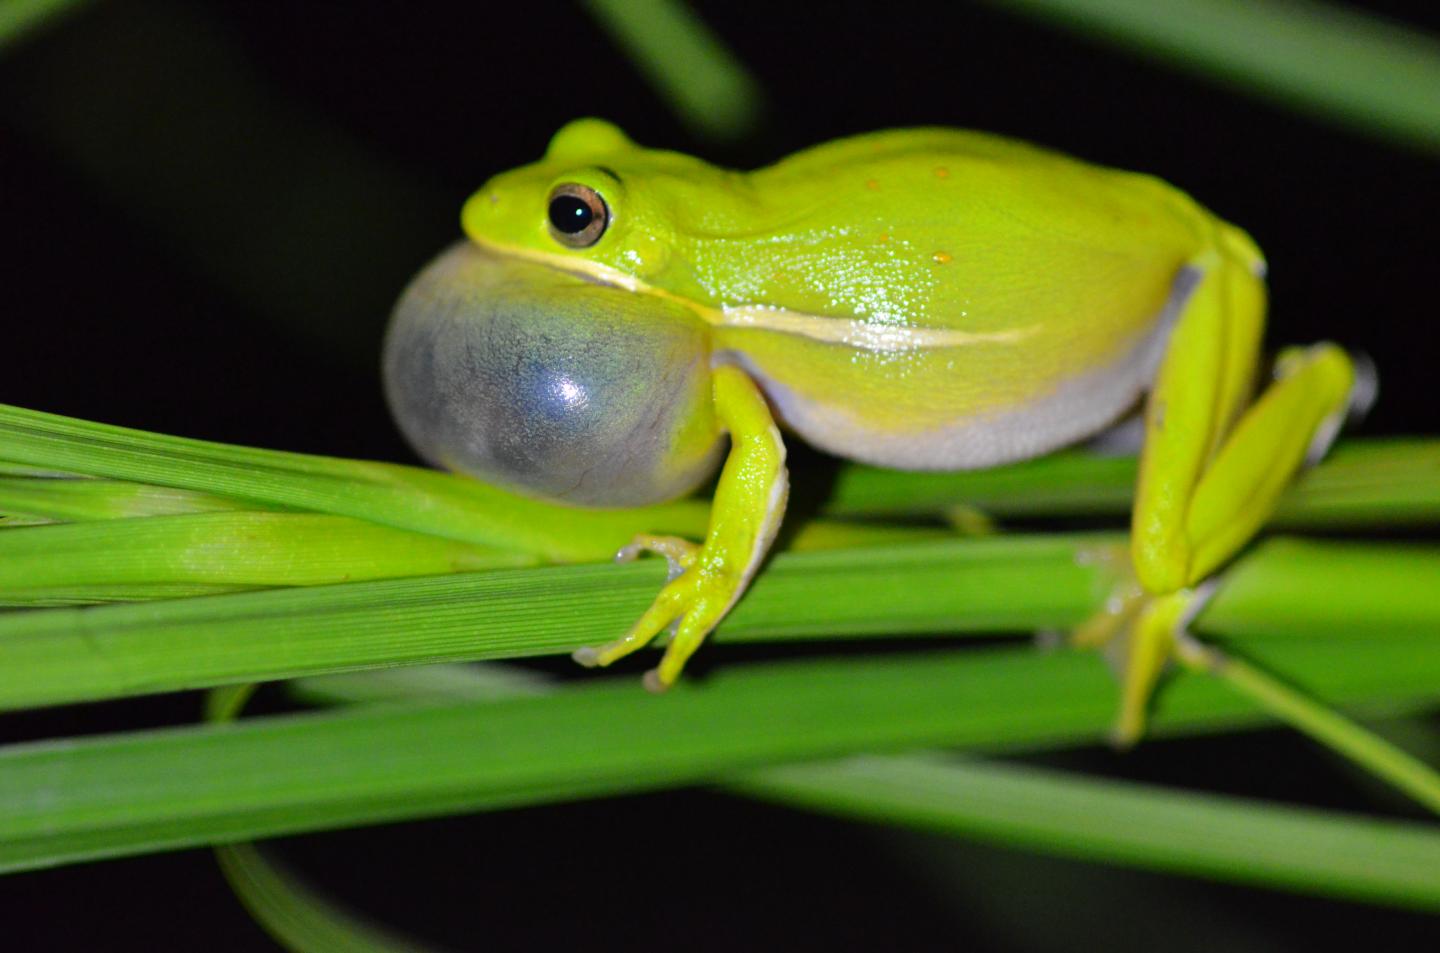 Male Green treefrog calling